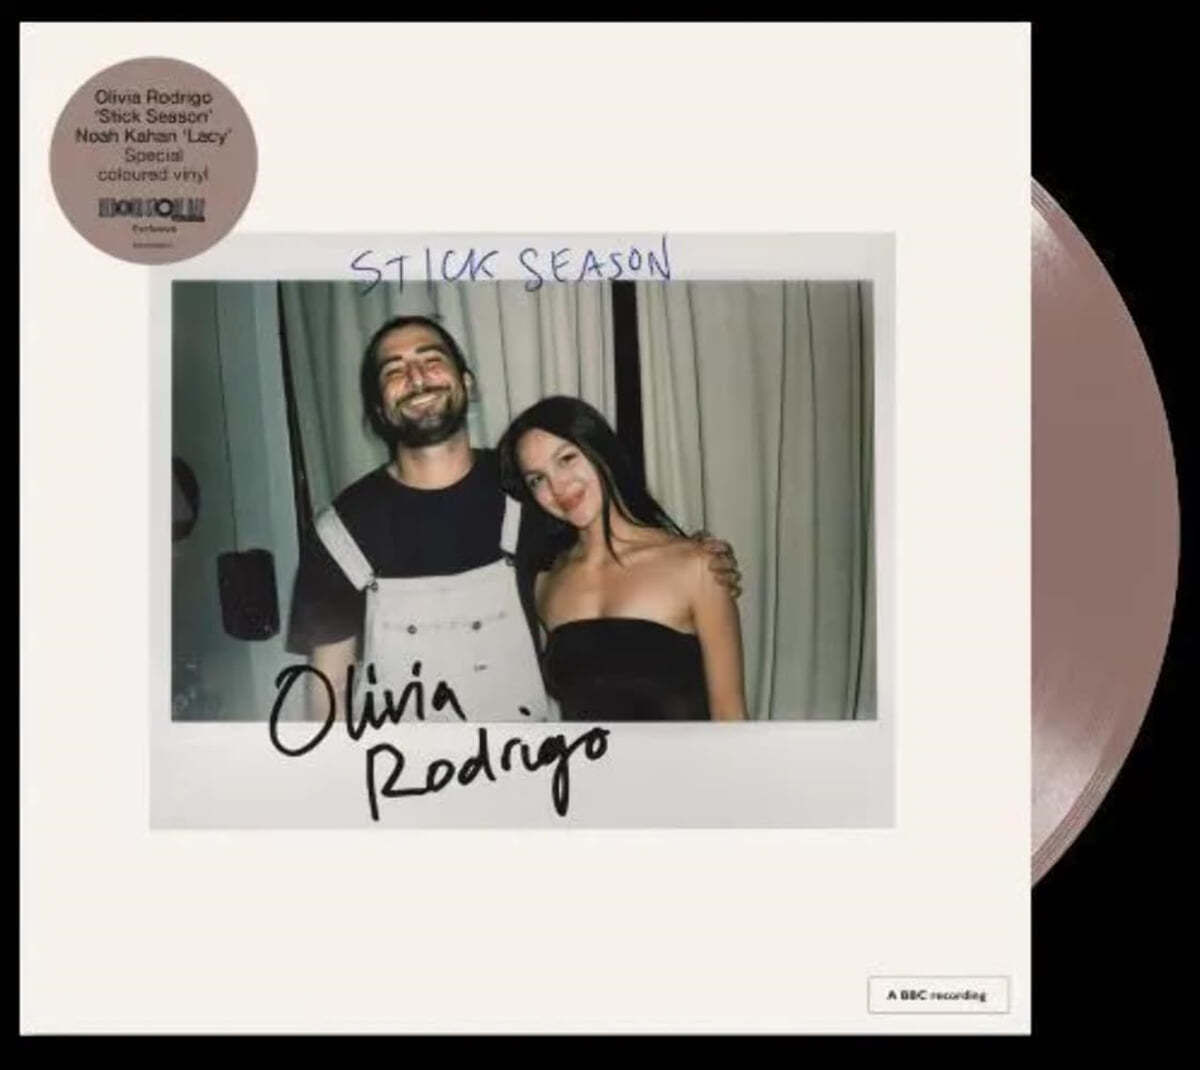 Olivia Rodrigo & Noah Kahan (올리비아 로드리고 & 노아 카한) - Stick Season / Lacy (BBC Live Lounge) [7인치 컬러 Vinyl]